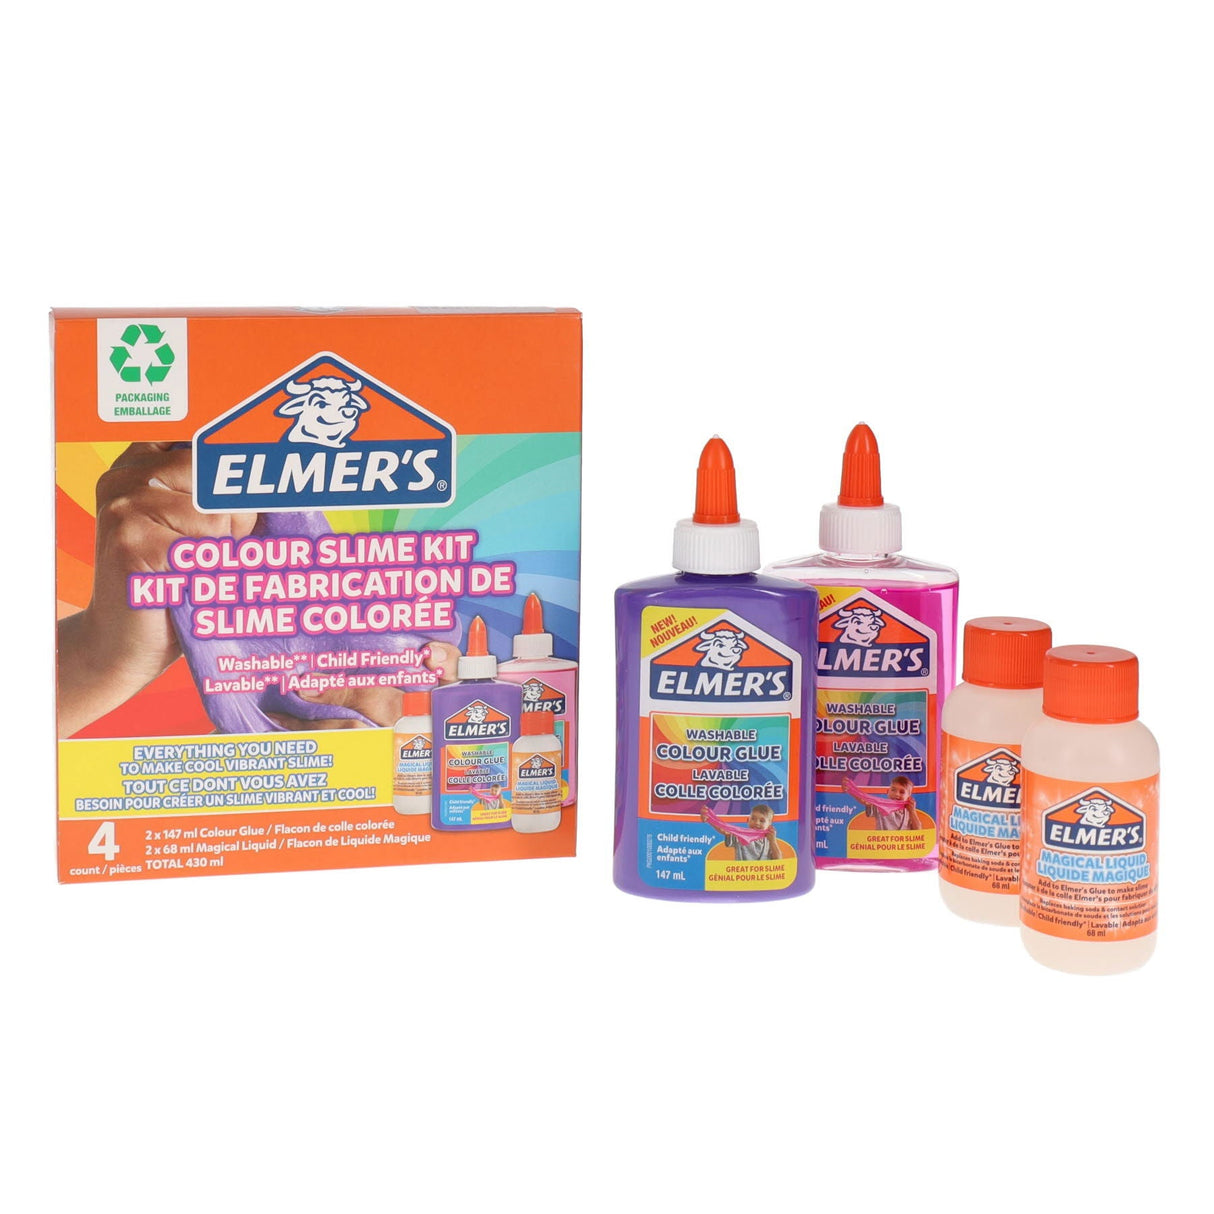 Elmer's Colour Slime Kit | Stationery Shop UK